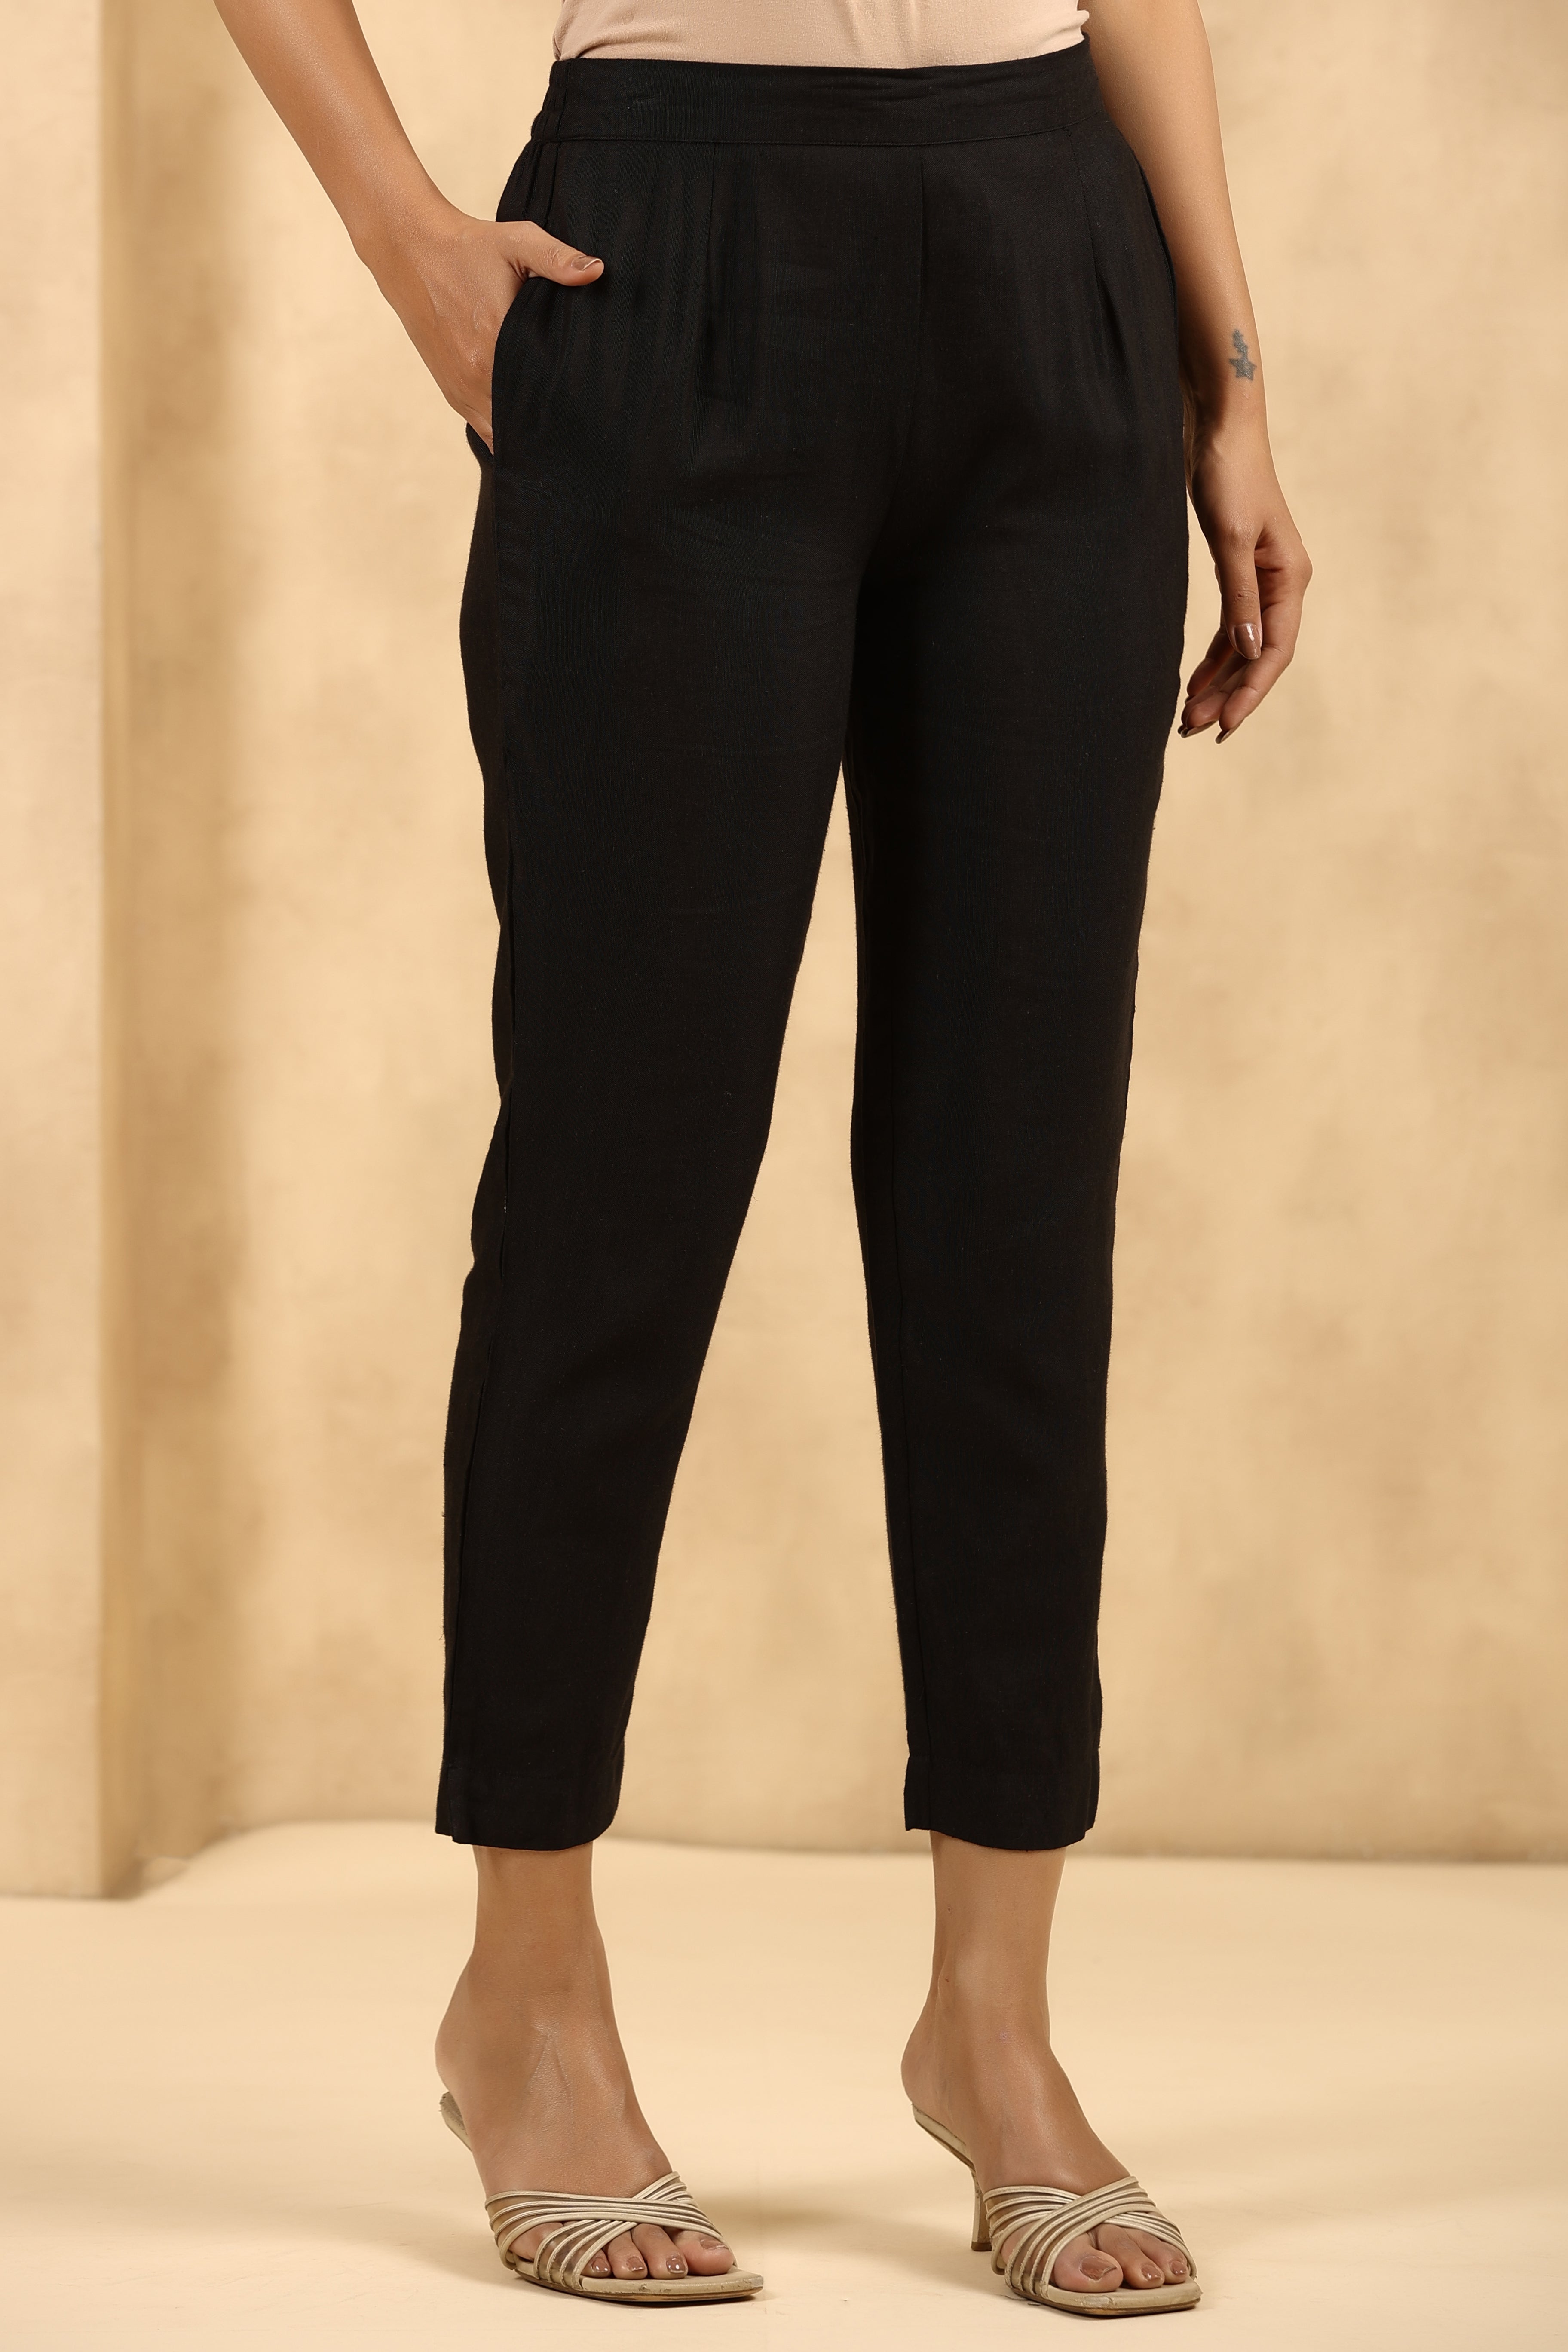 Juniper Women's Black Rayon Flex Solid Stright Pant/Slim Pant